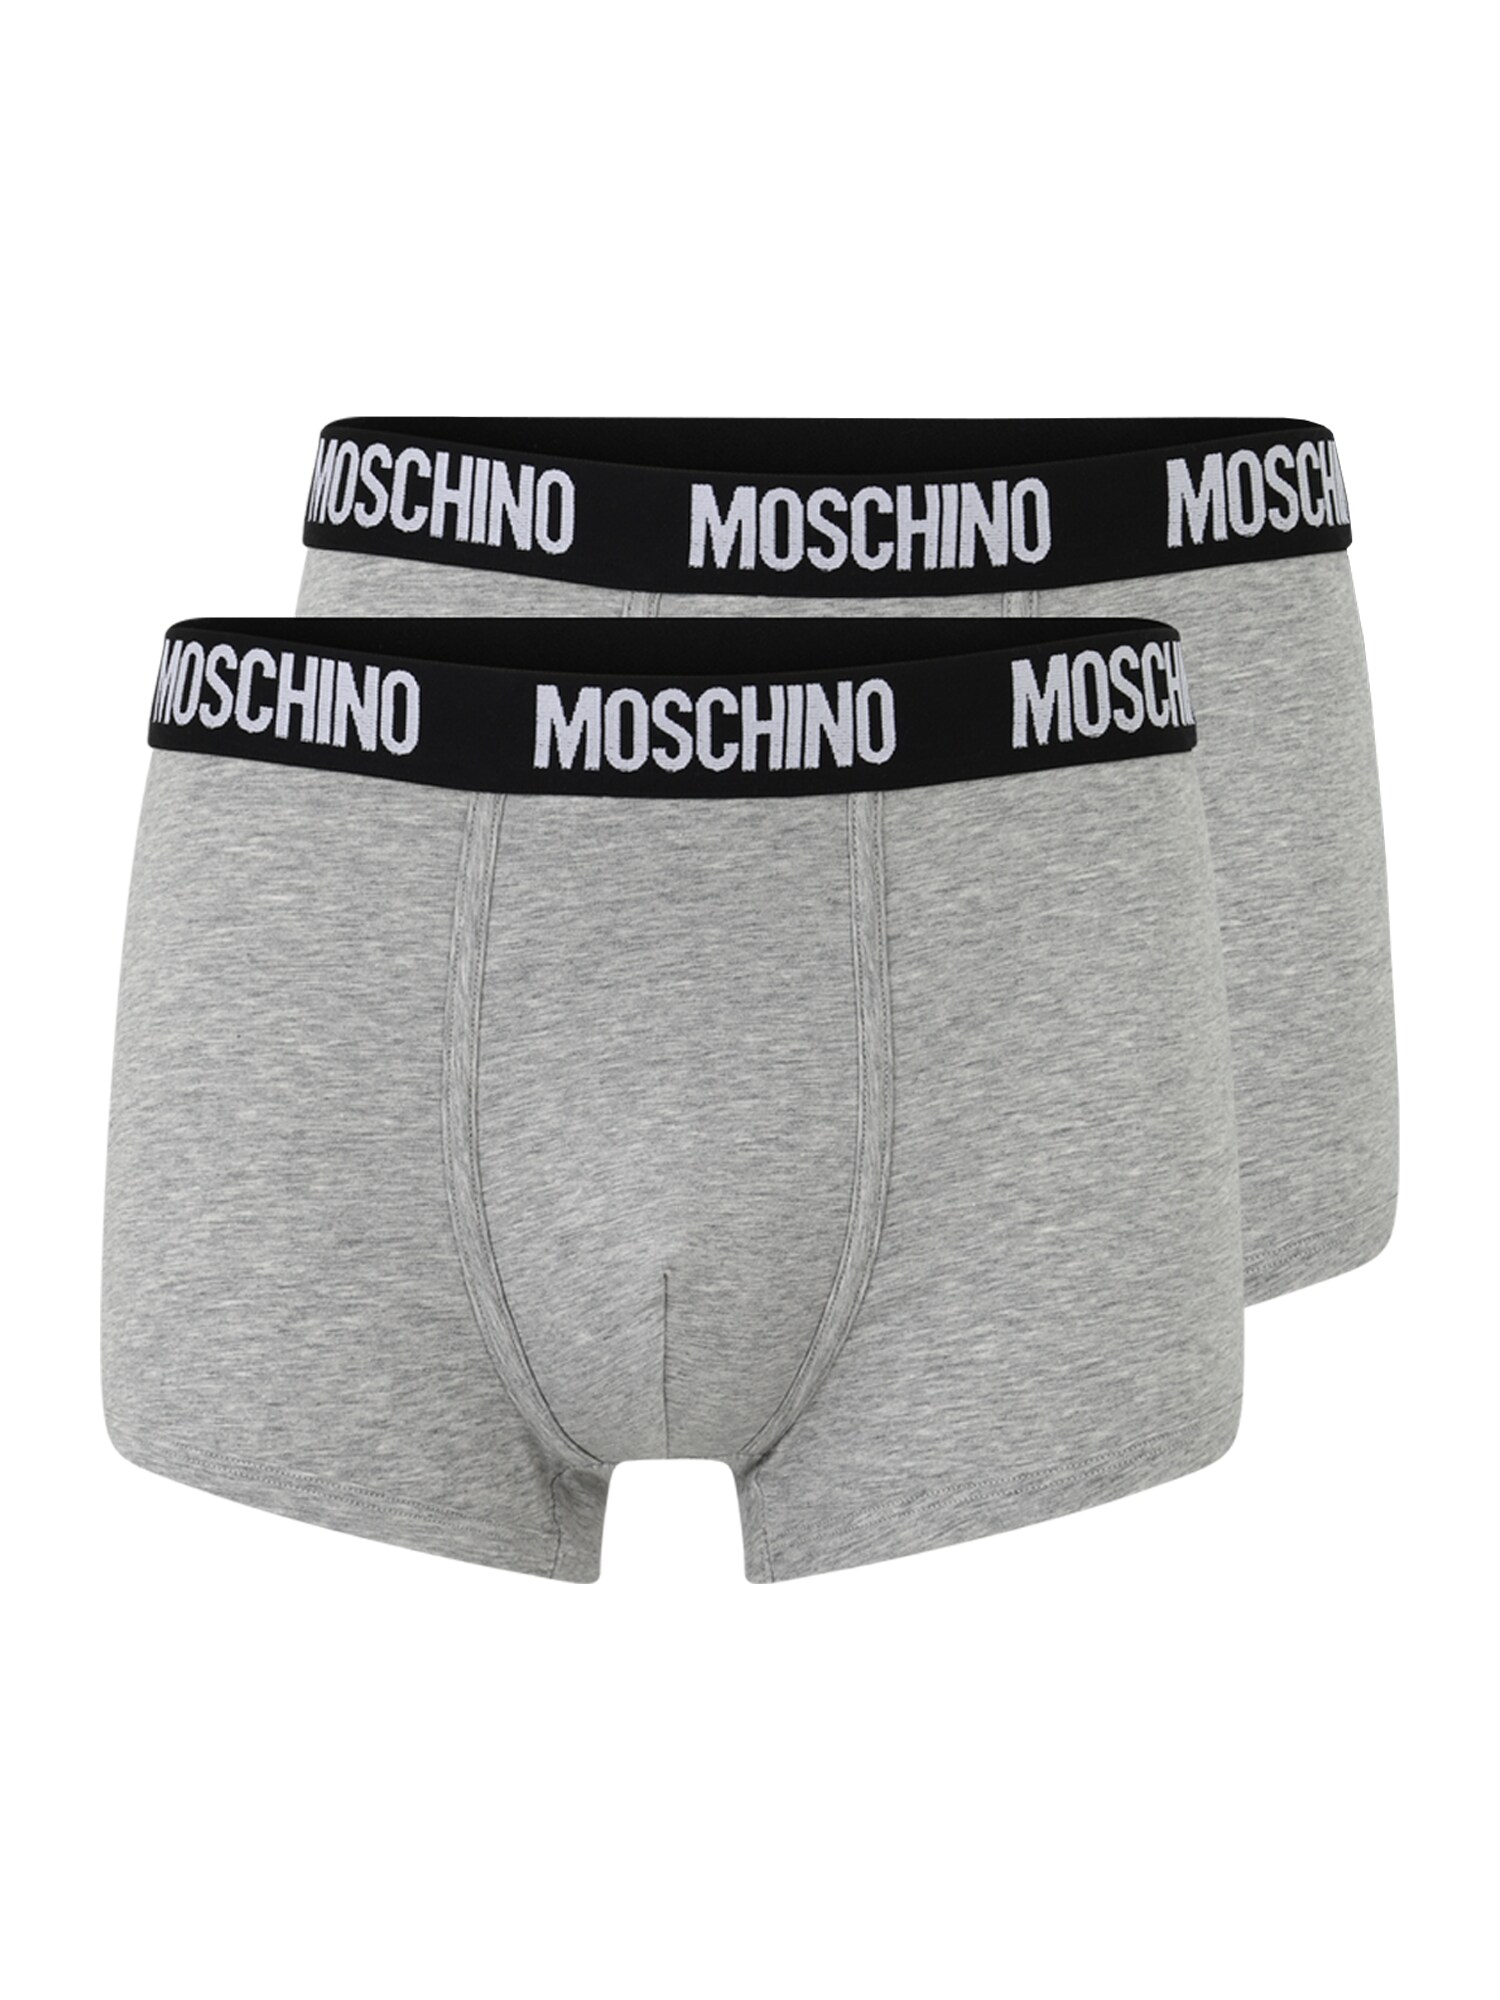 Moschino Underwear Boxer trumpikės margai pilka / juoda / balta